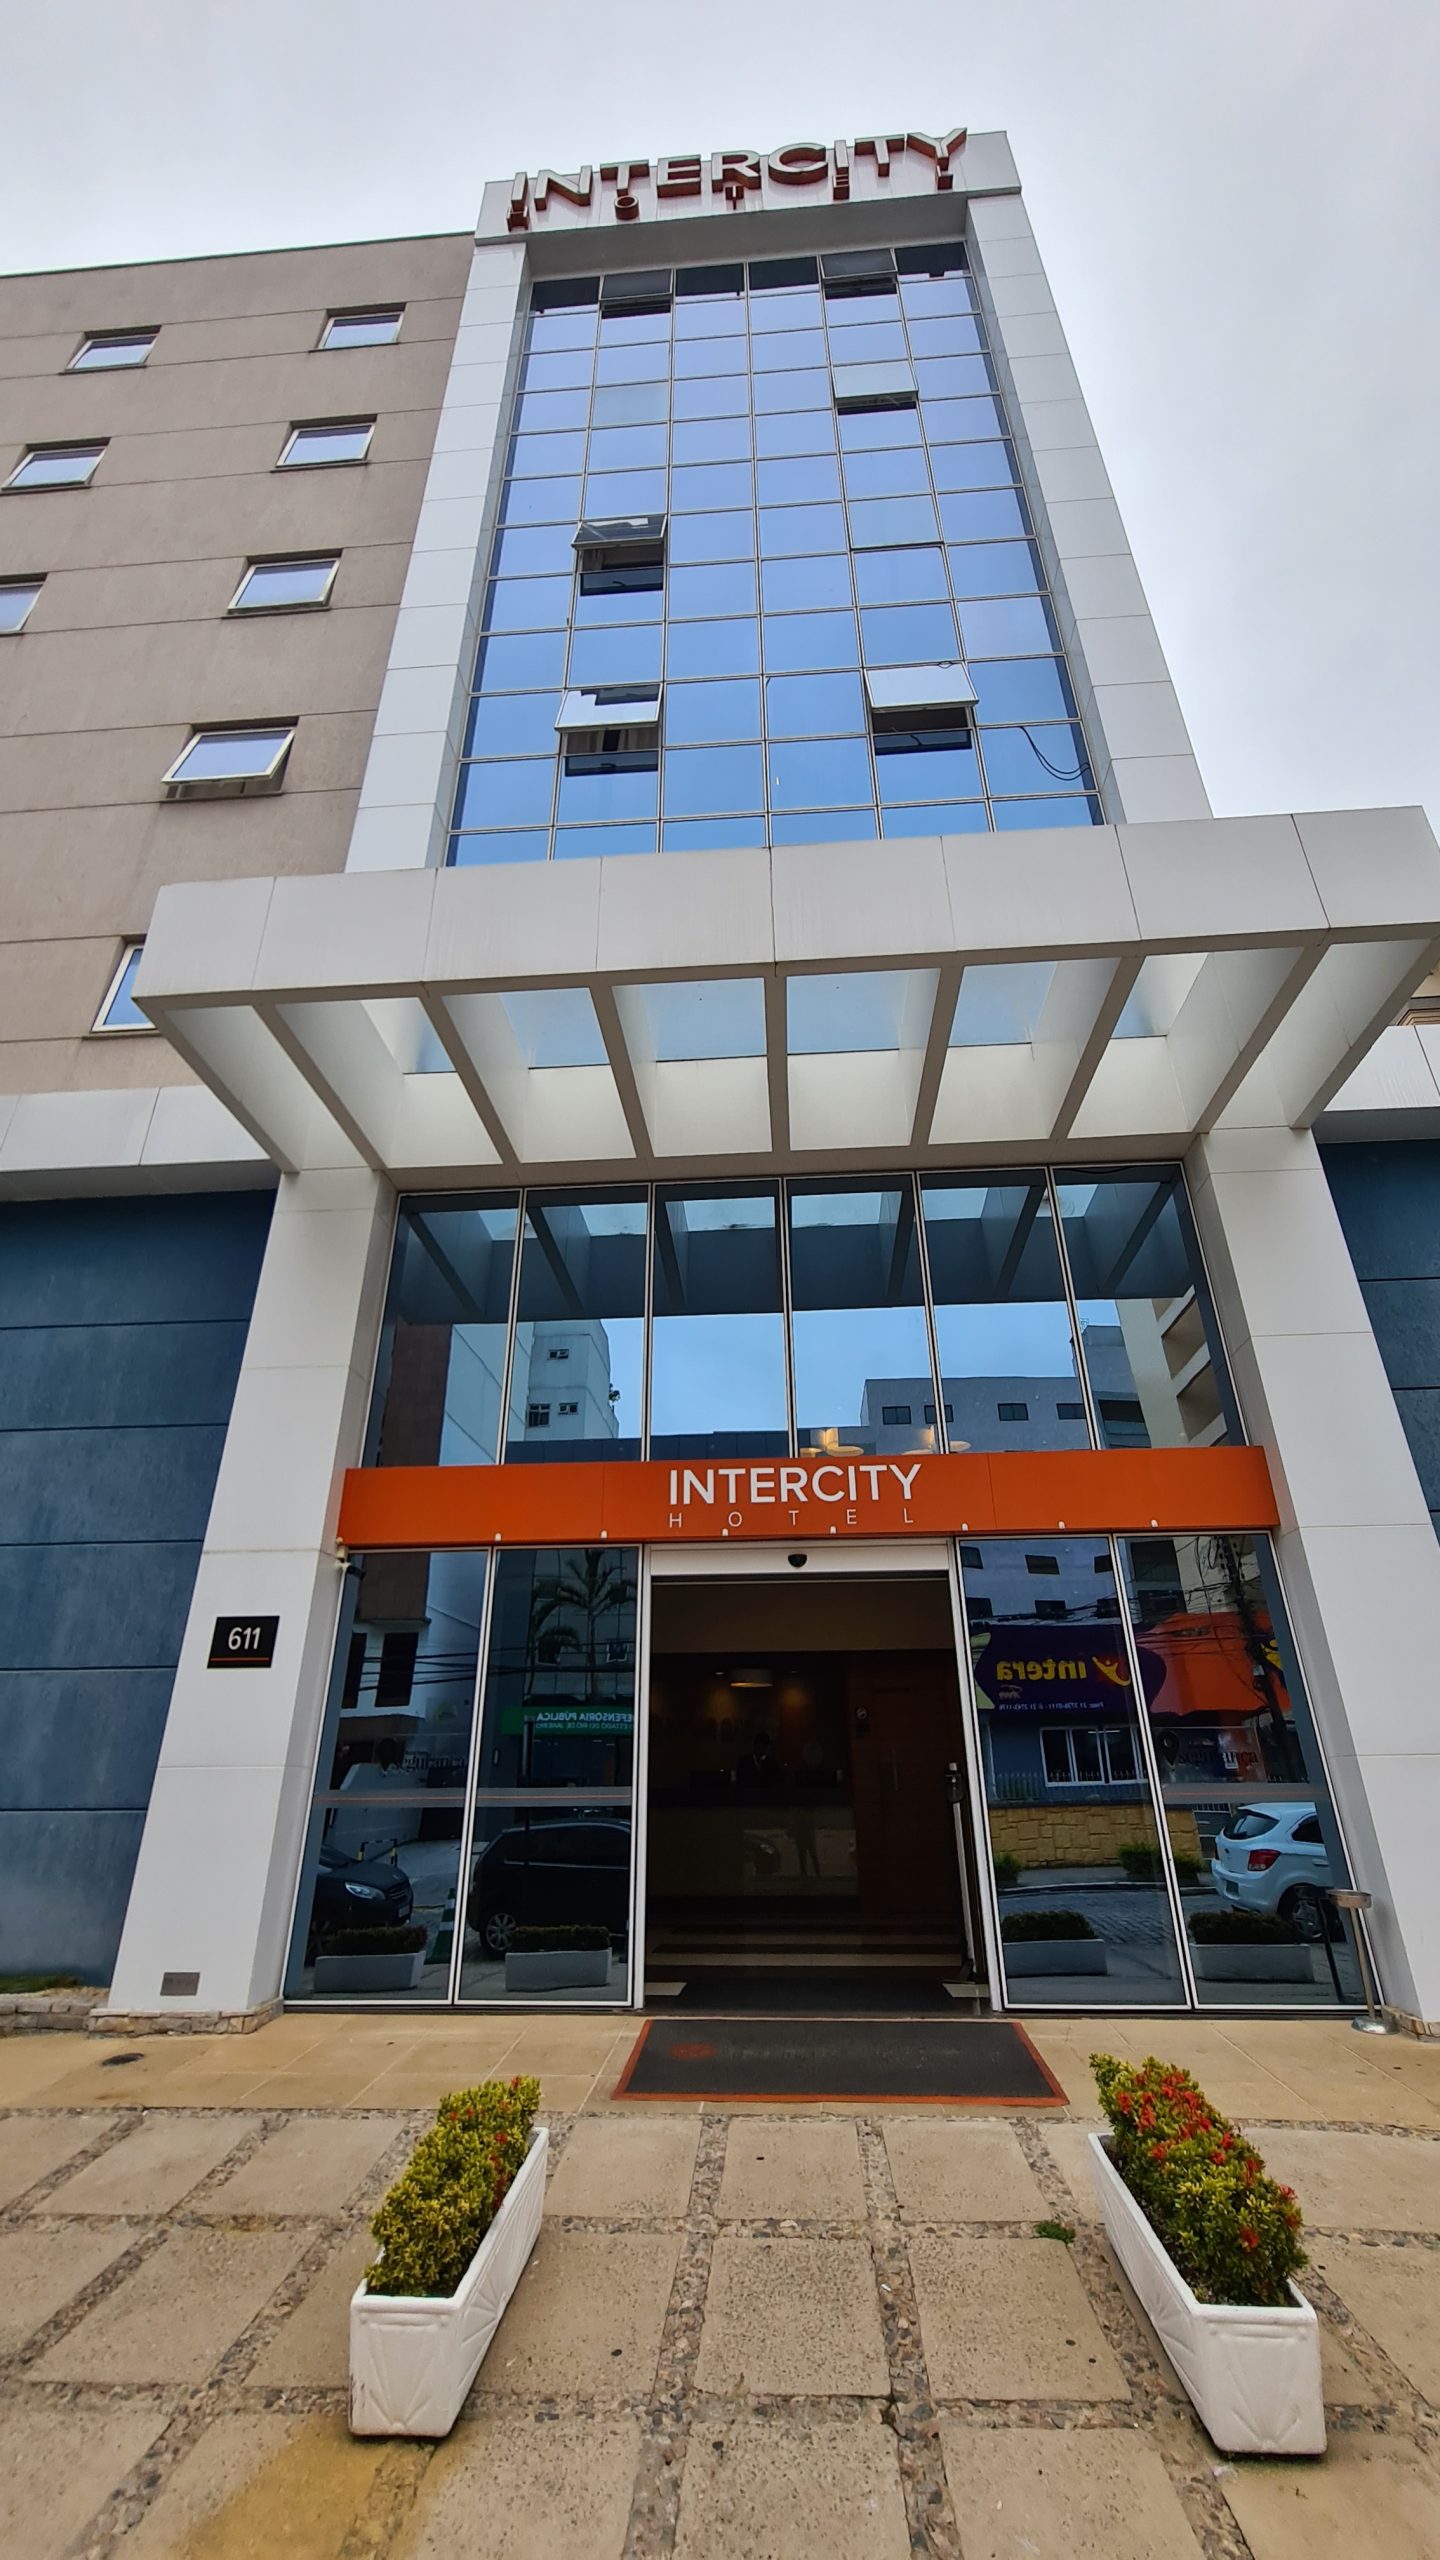 Onde se hospedar em Teresópolis? Intercity Hotel